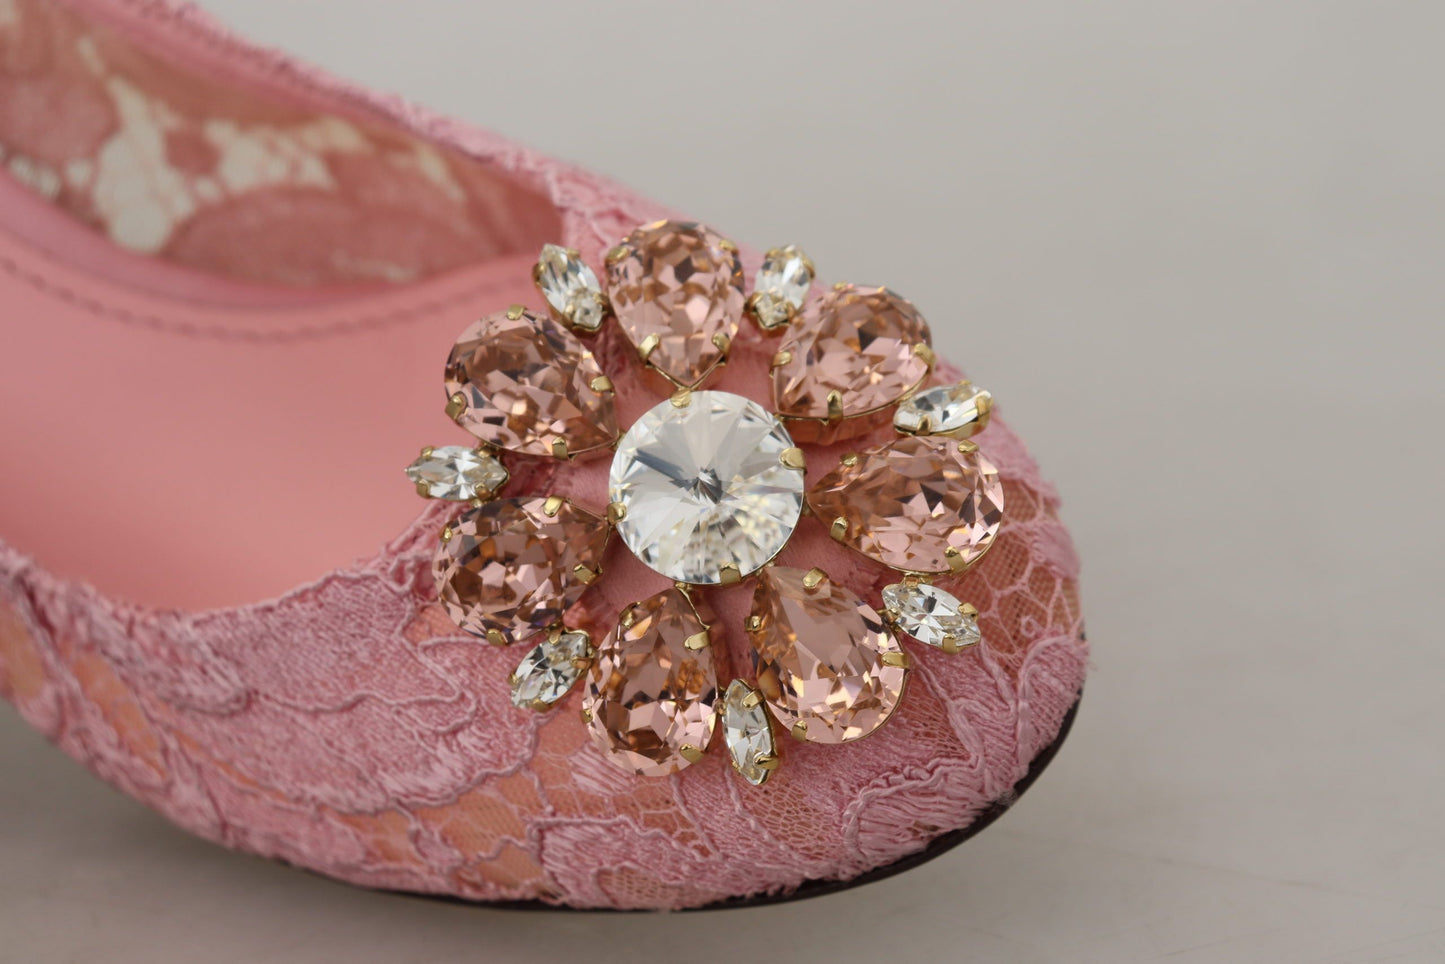 Dolce & Gabbana Pink Taormina Lace Crystal Pumps Pastel Shoes